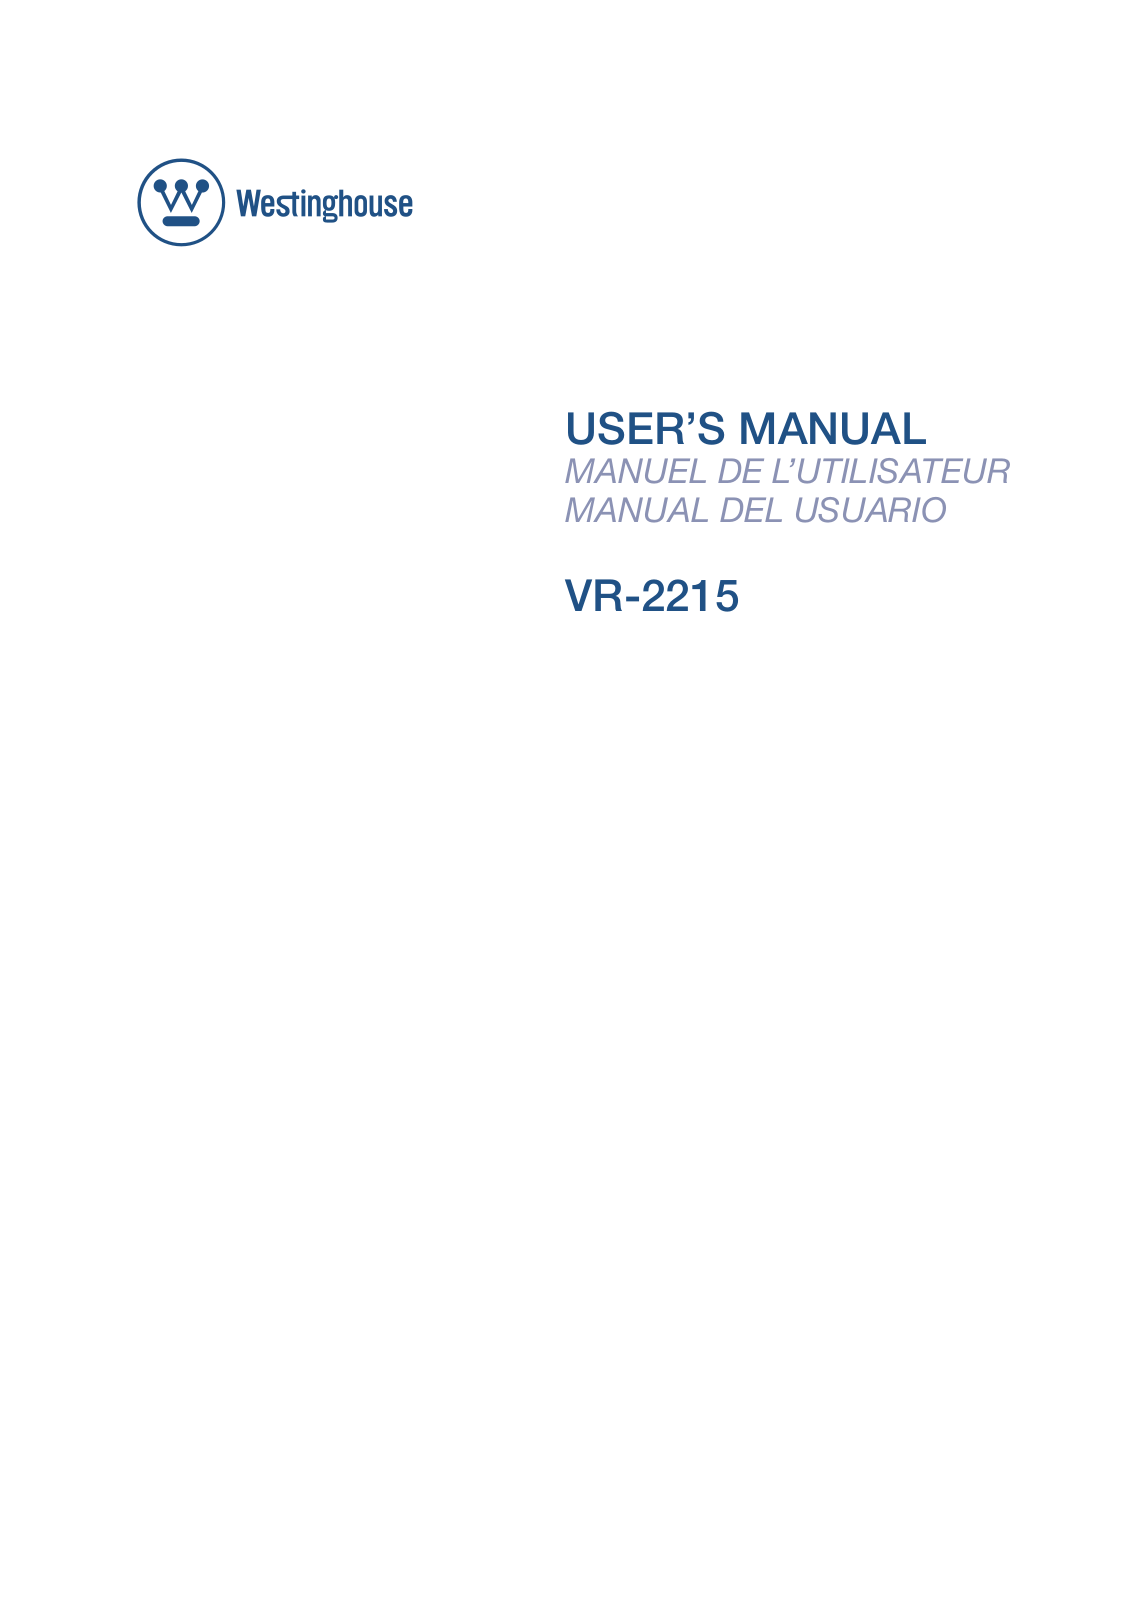 Westinghouse Digital VR-2215 User Manual